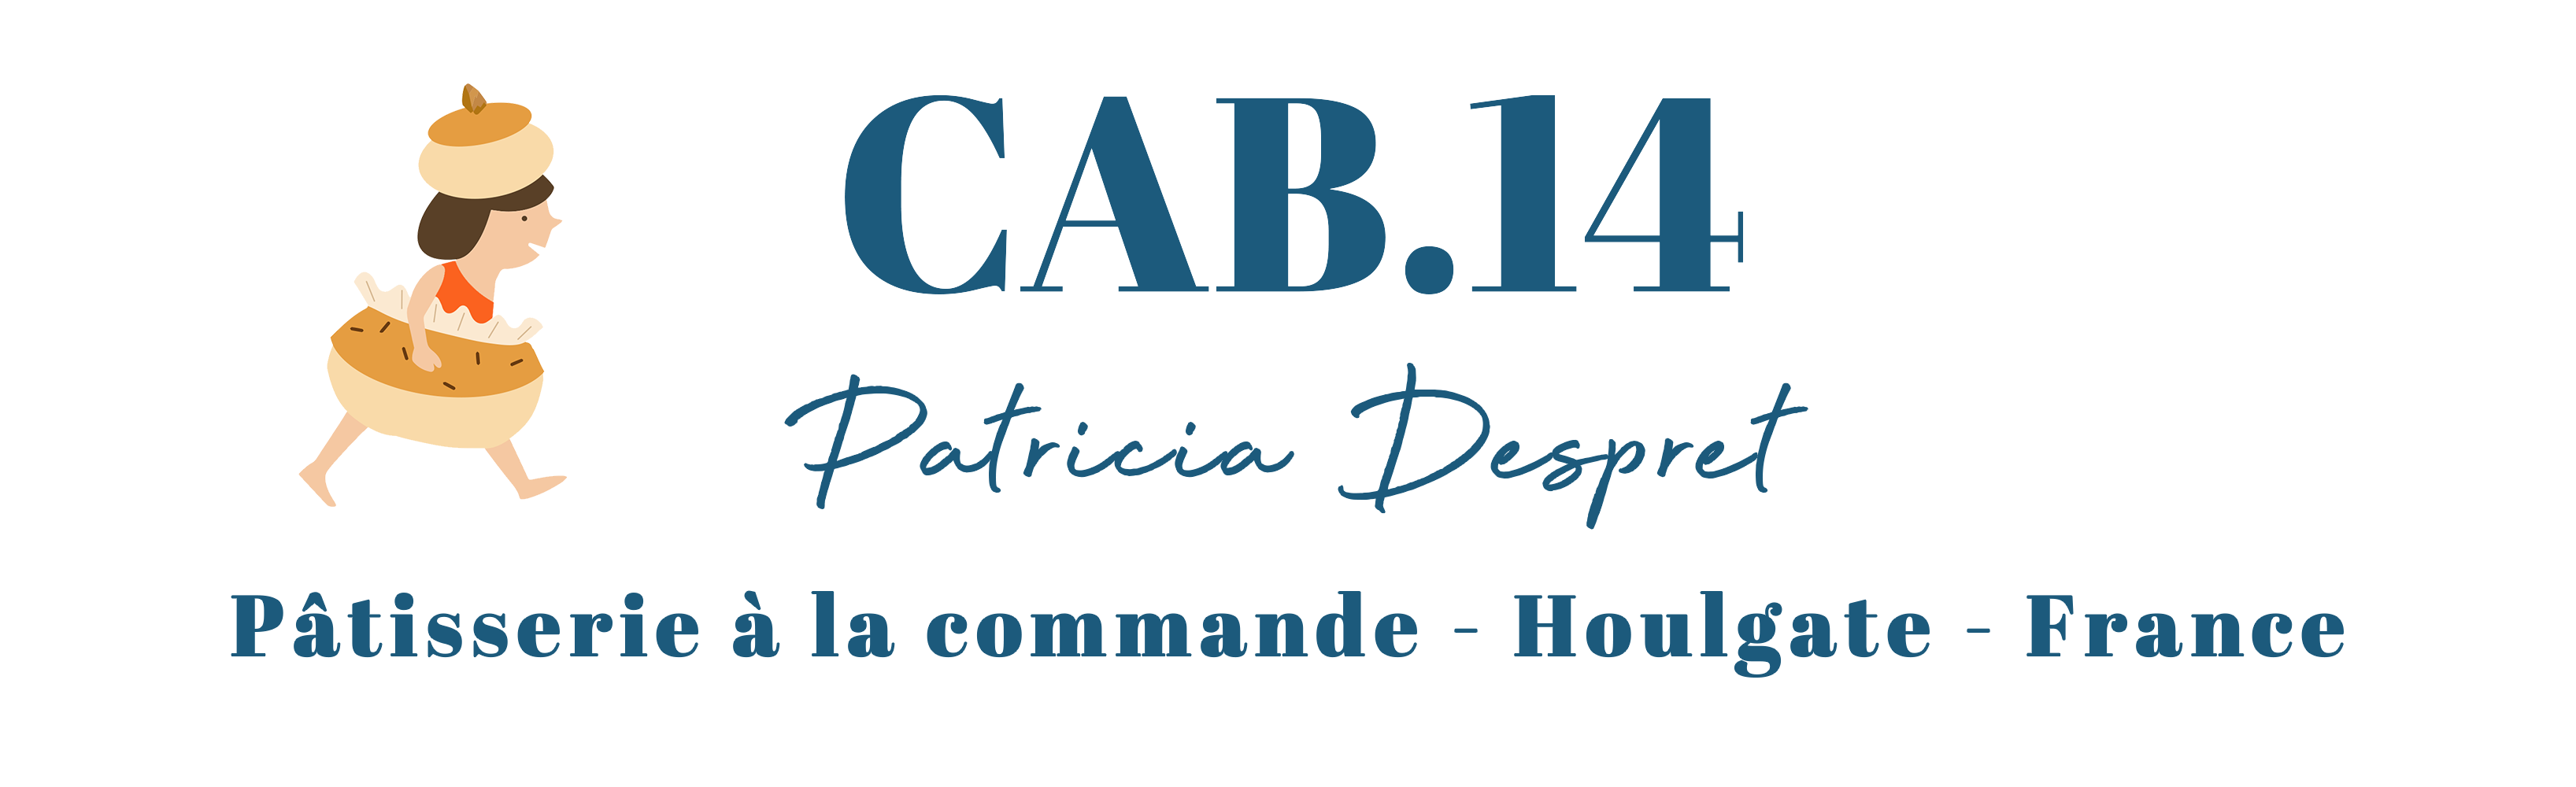 Cab 14-  Patricia Despret